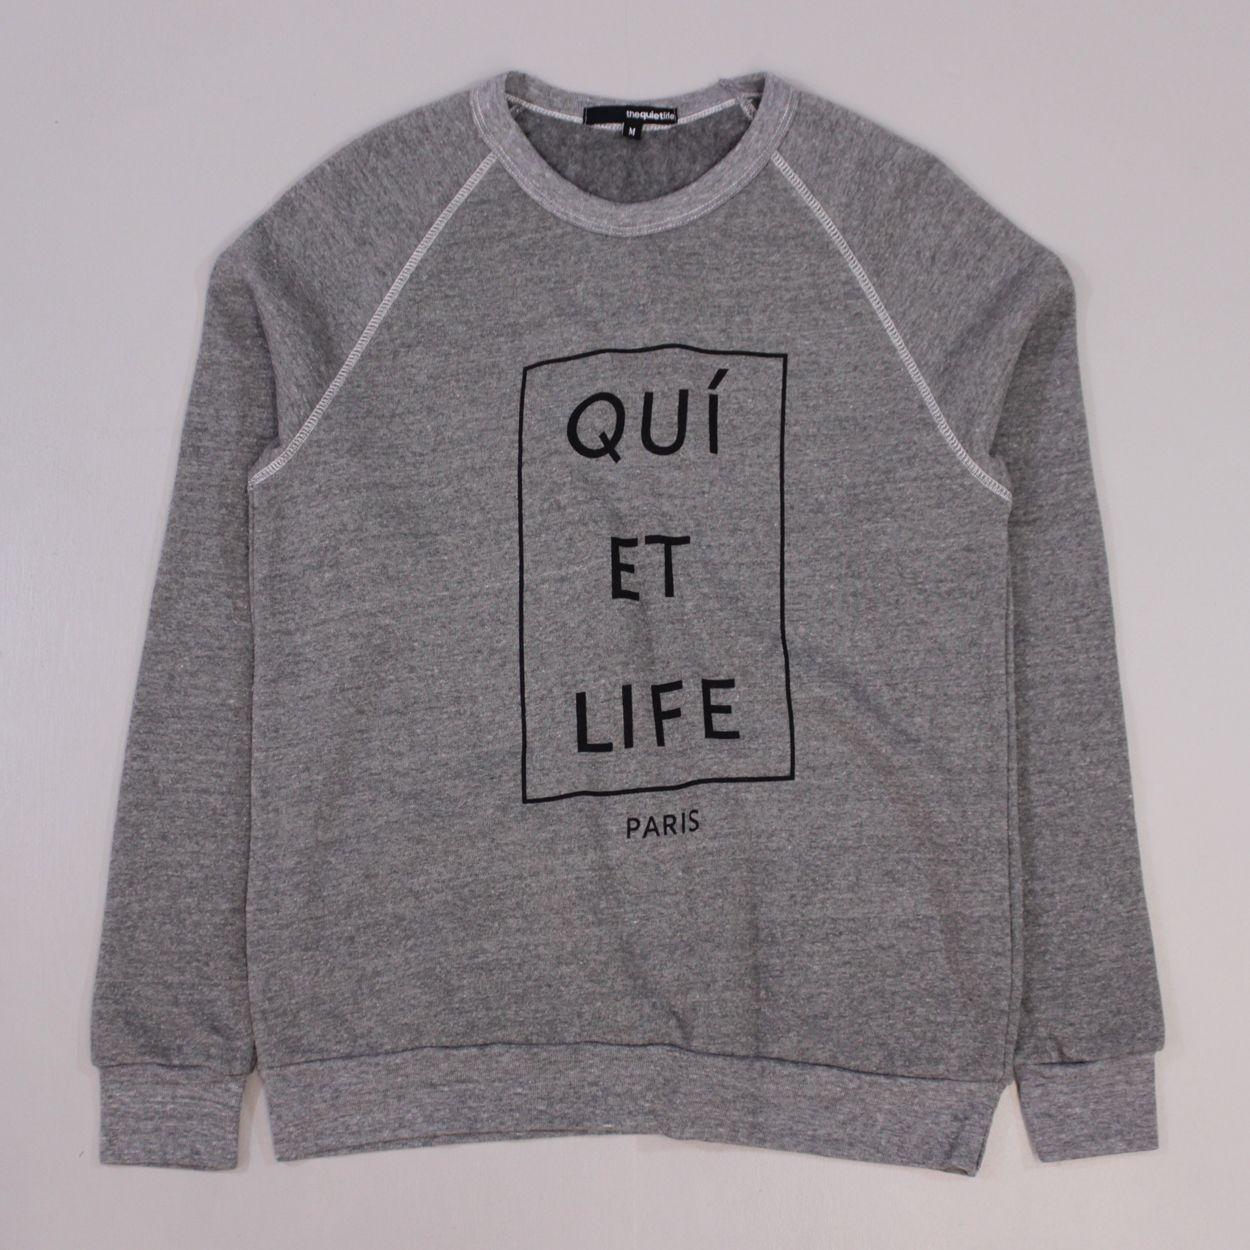 Quiet Life Clothing Logo - The Quiet Life Paris Crewneck Heather Grey Black Logo Long Sleeve £49.00